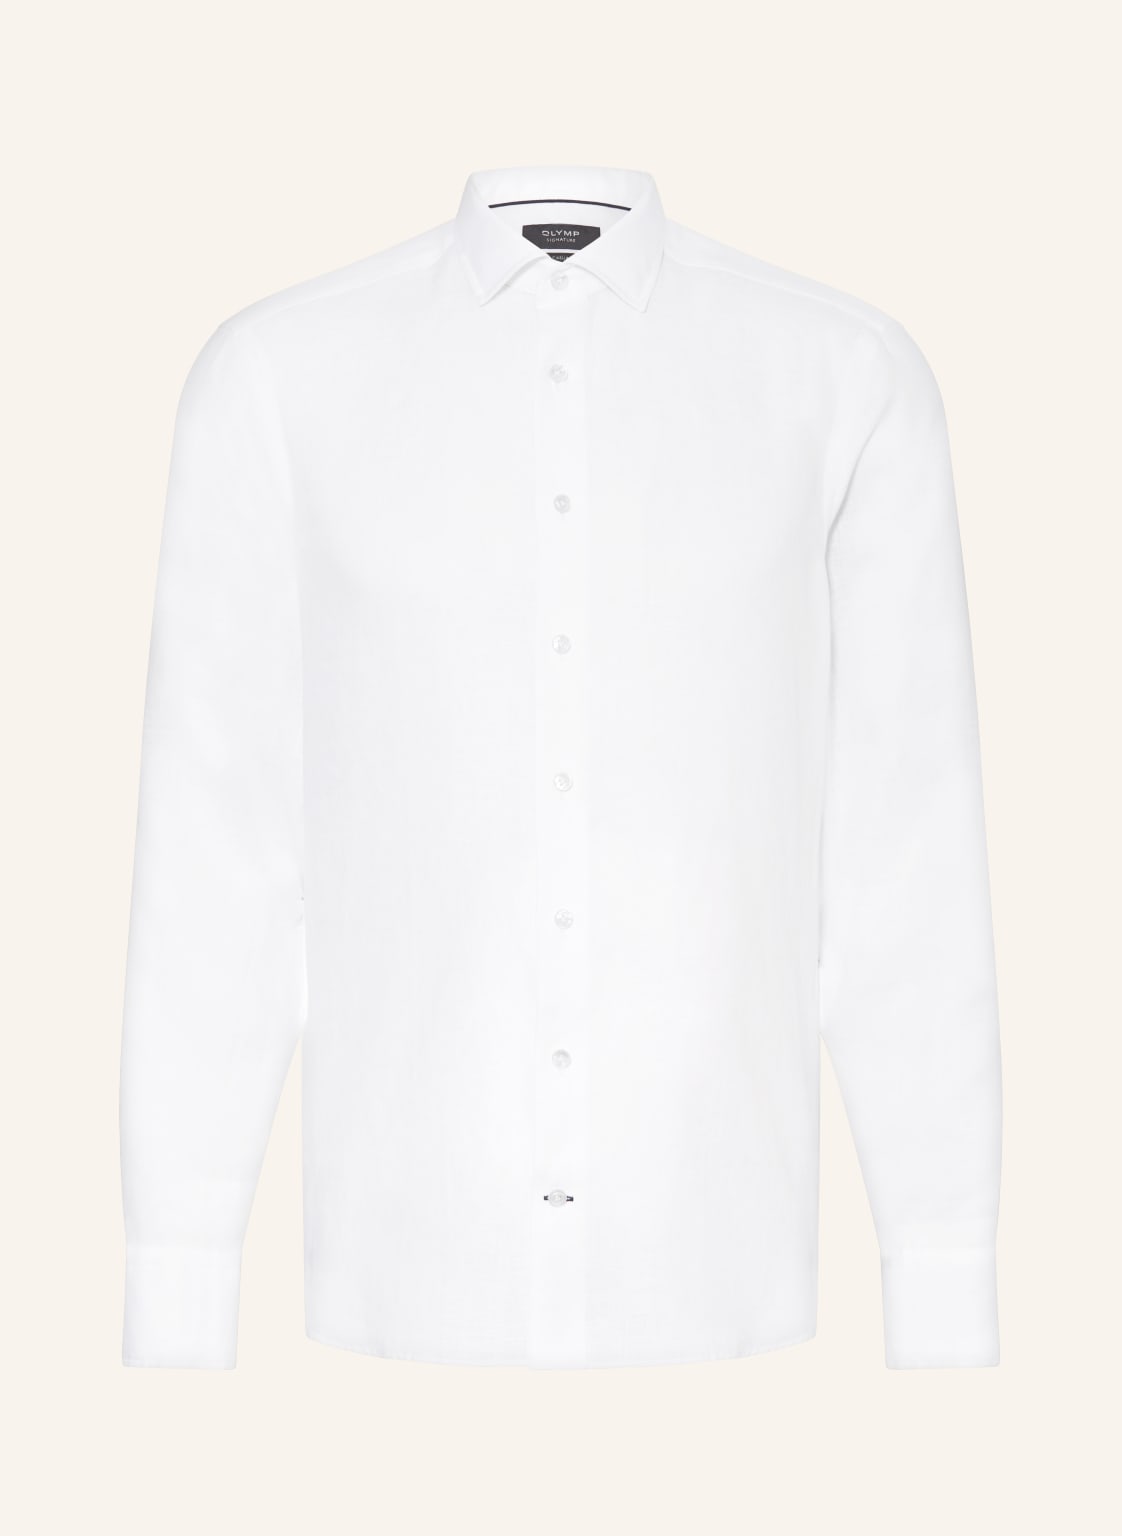 Olymp Signature Leinenhemd Tailored Fit weiss von OLYMP SIGNATURE